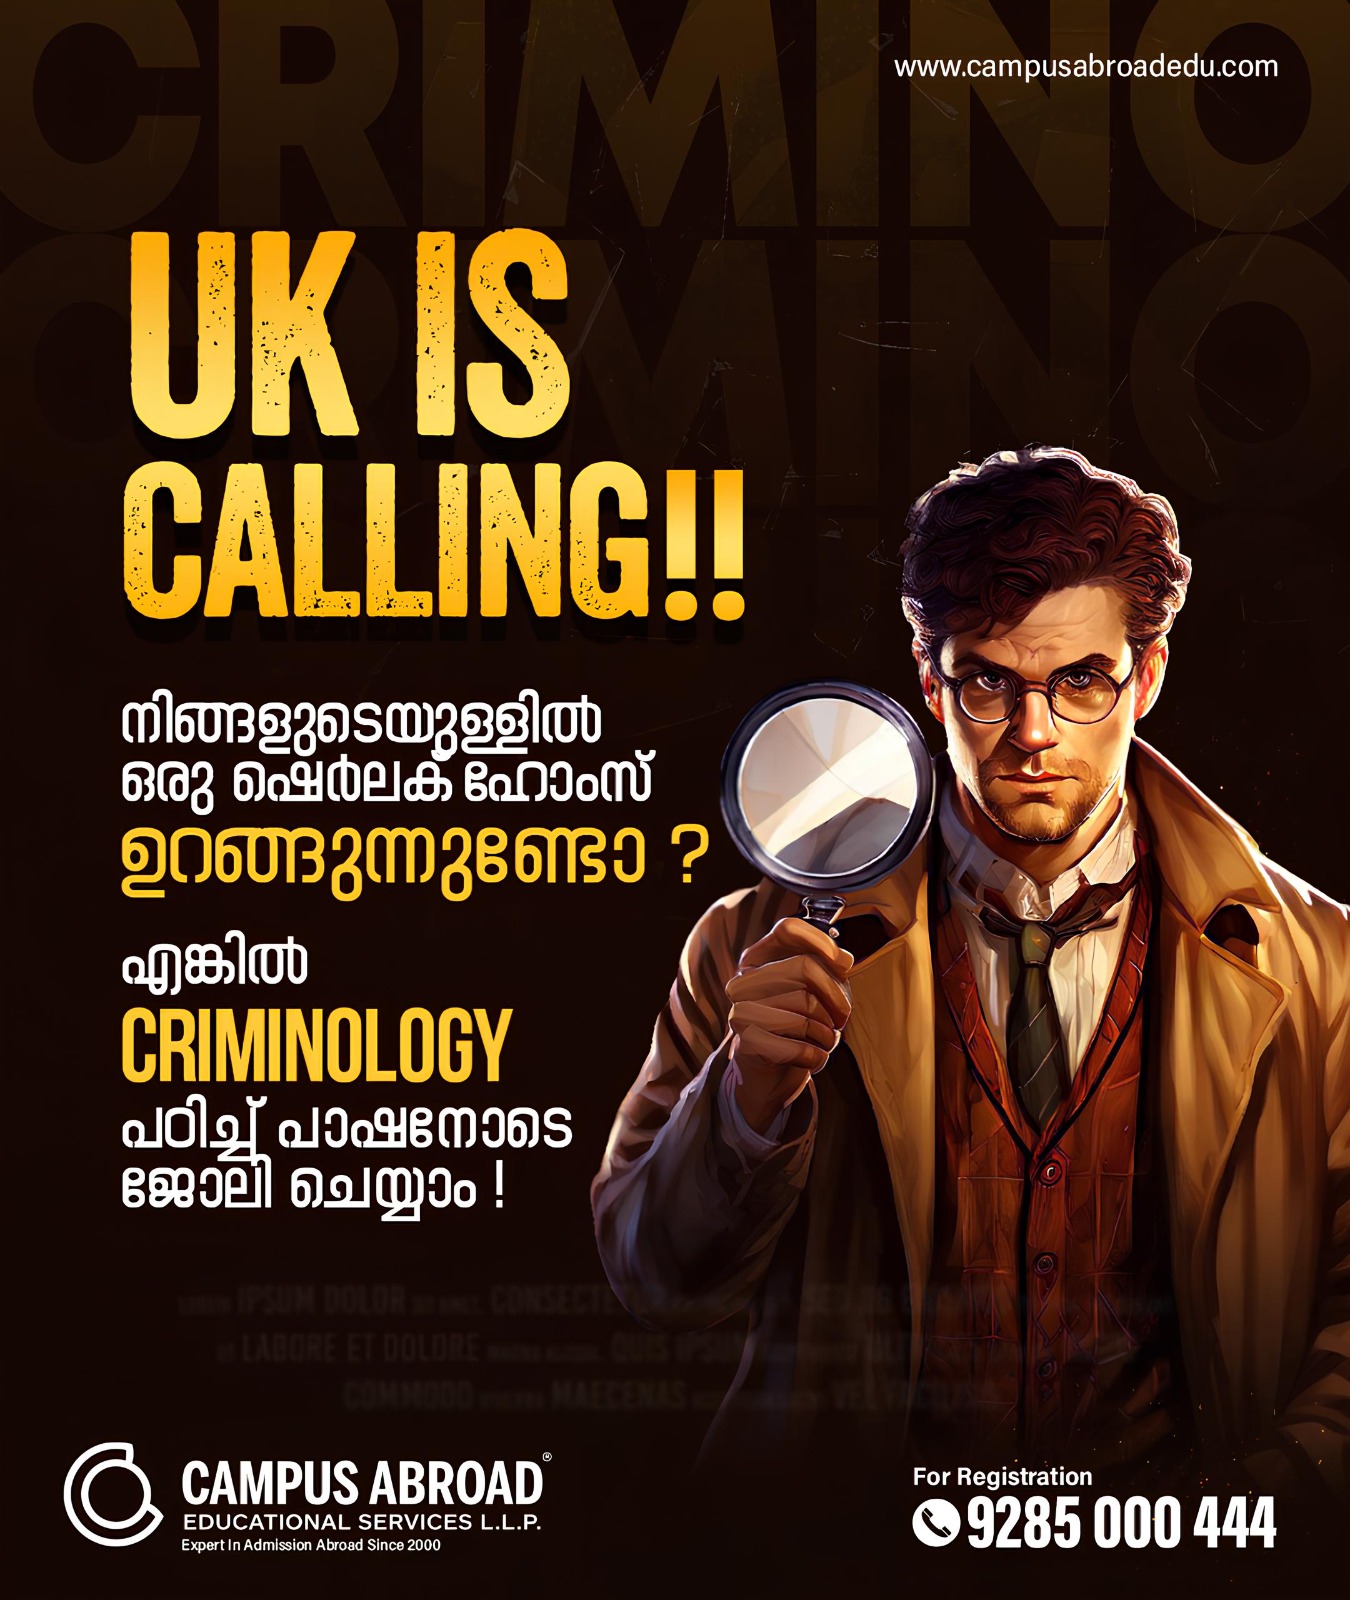 STUDY CRIMINOLOGY IN UK